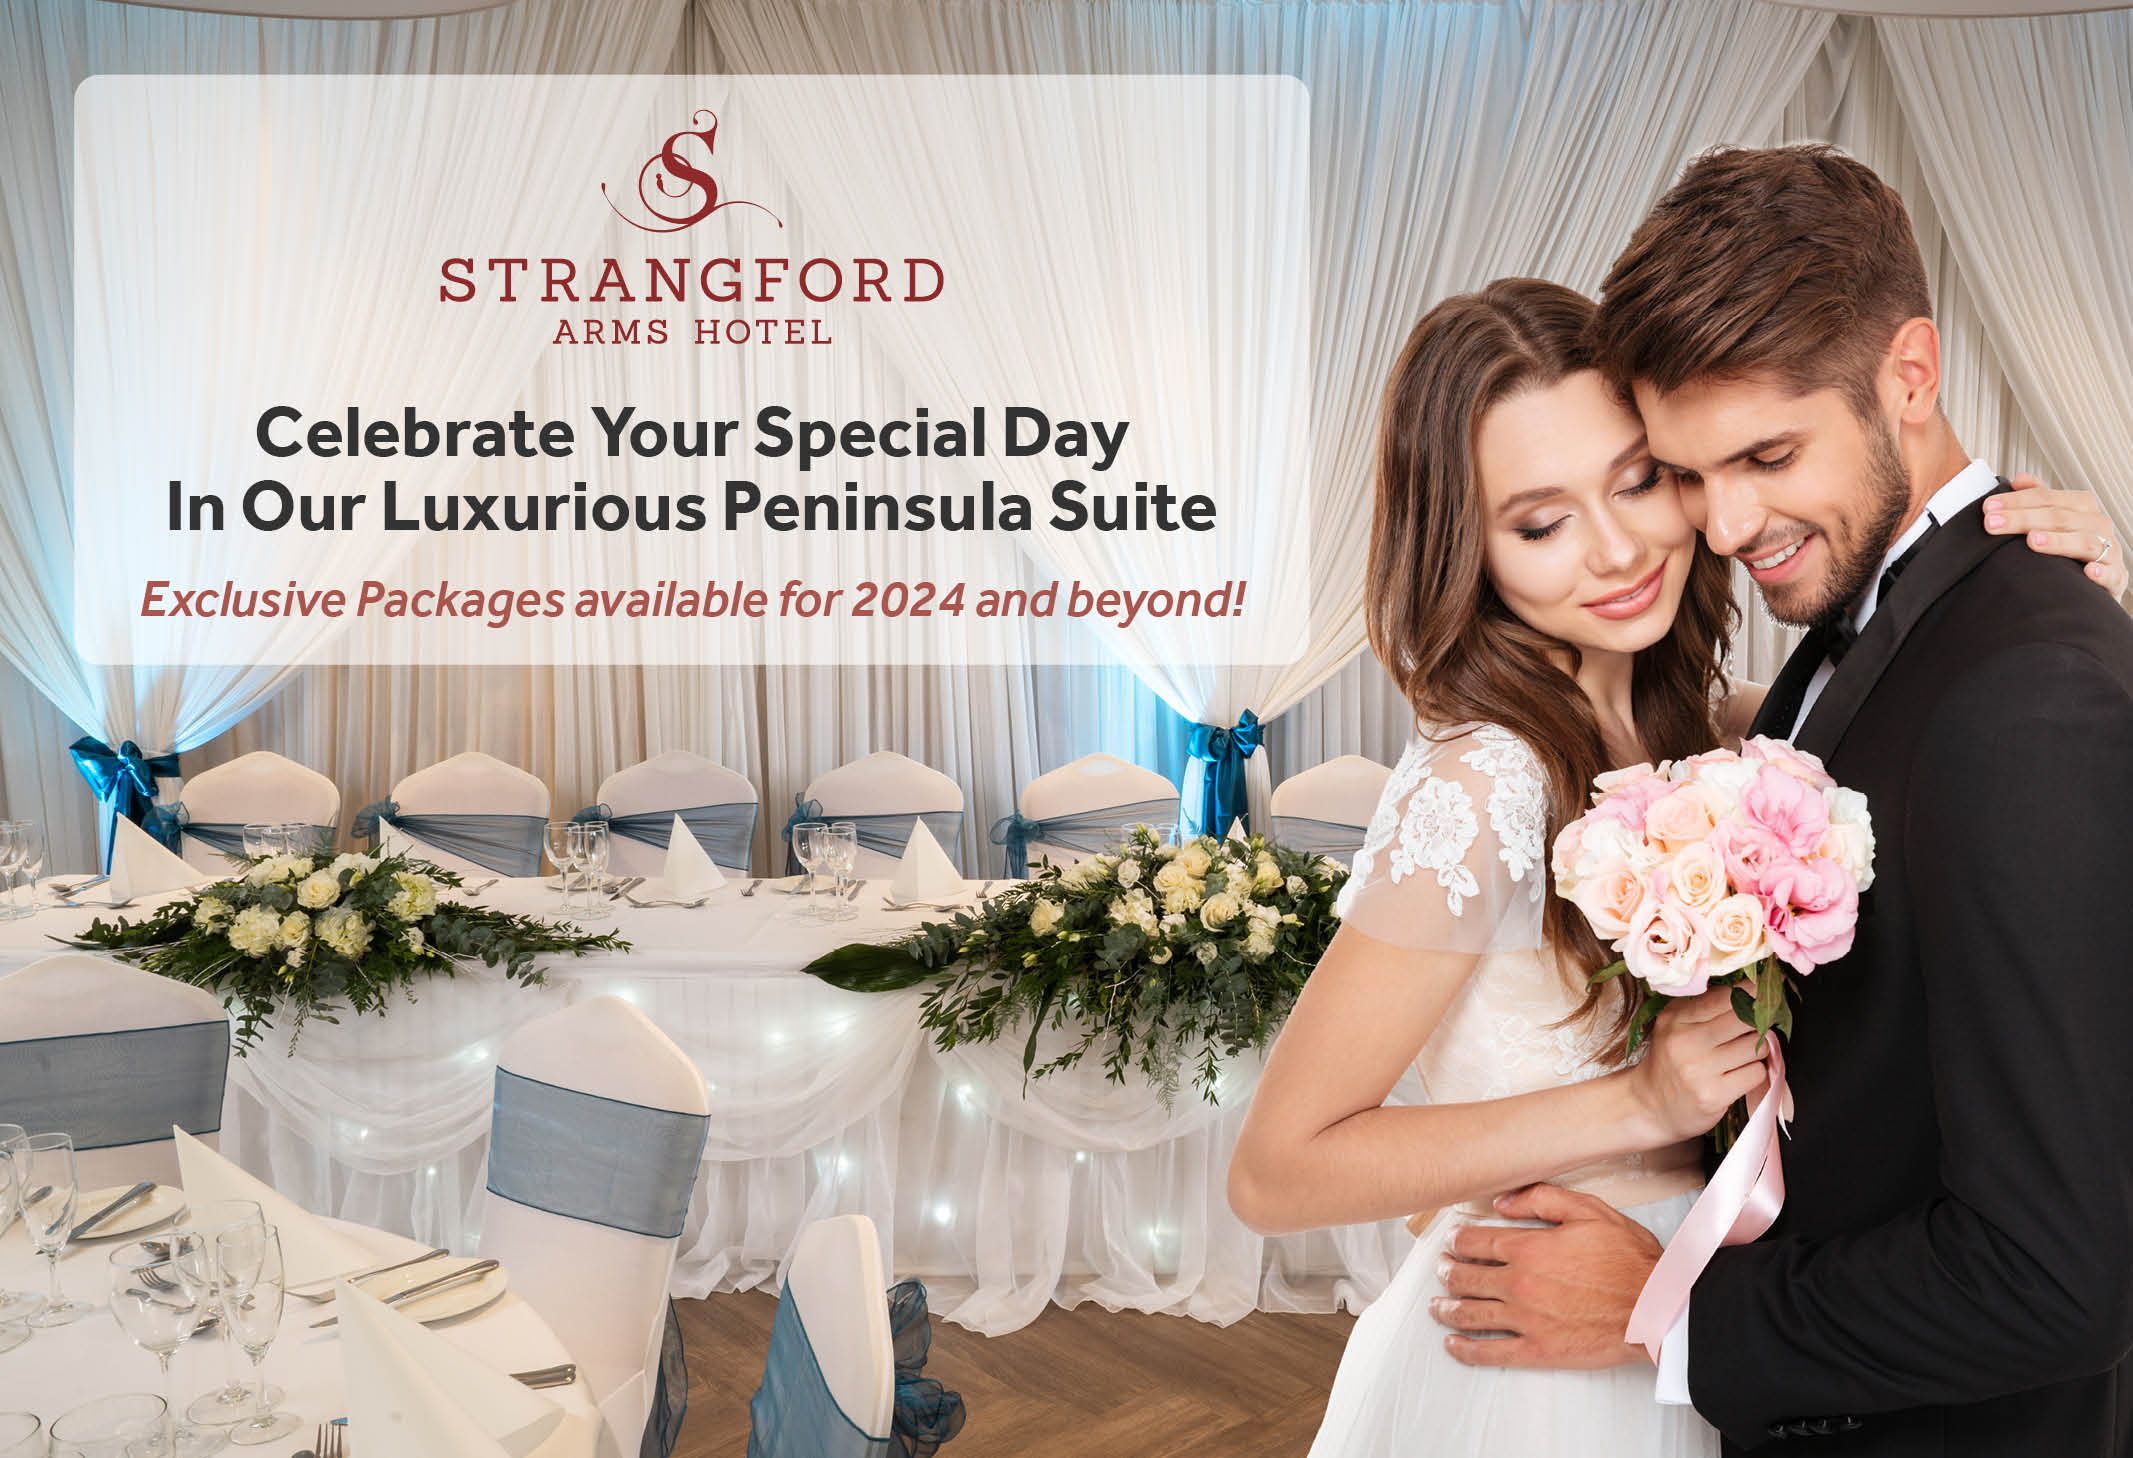 Weddings at Strangford Arms Hotel